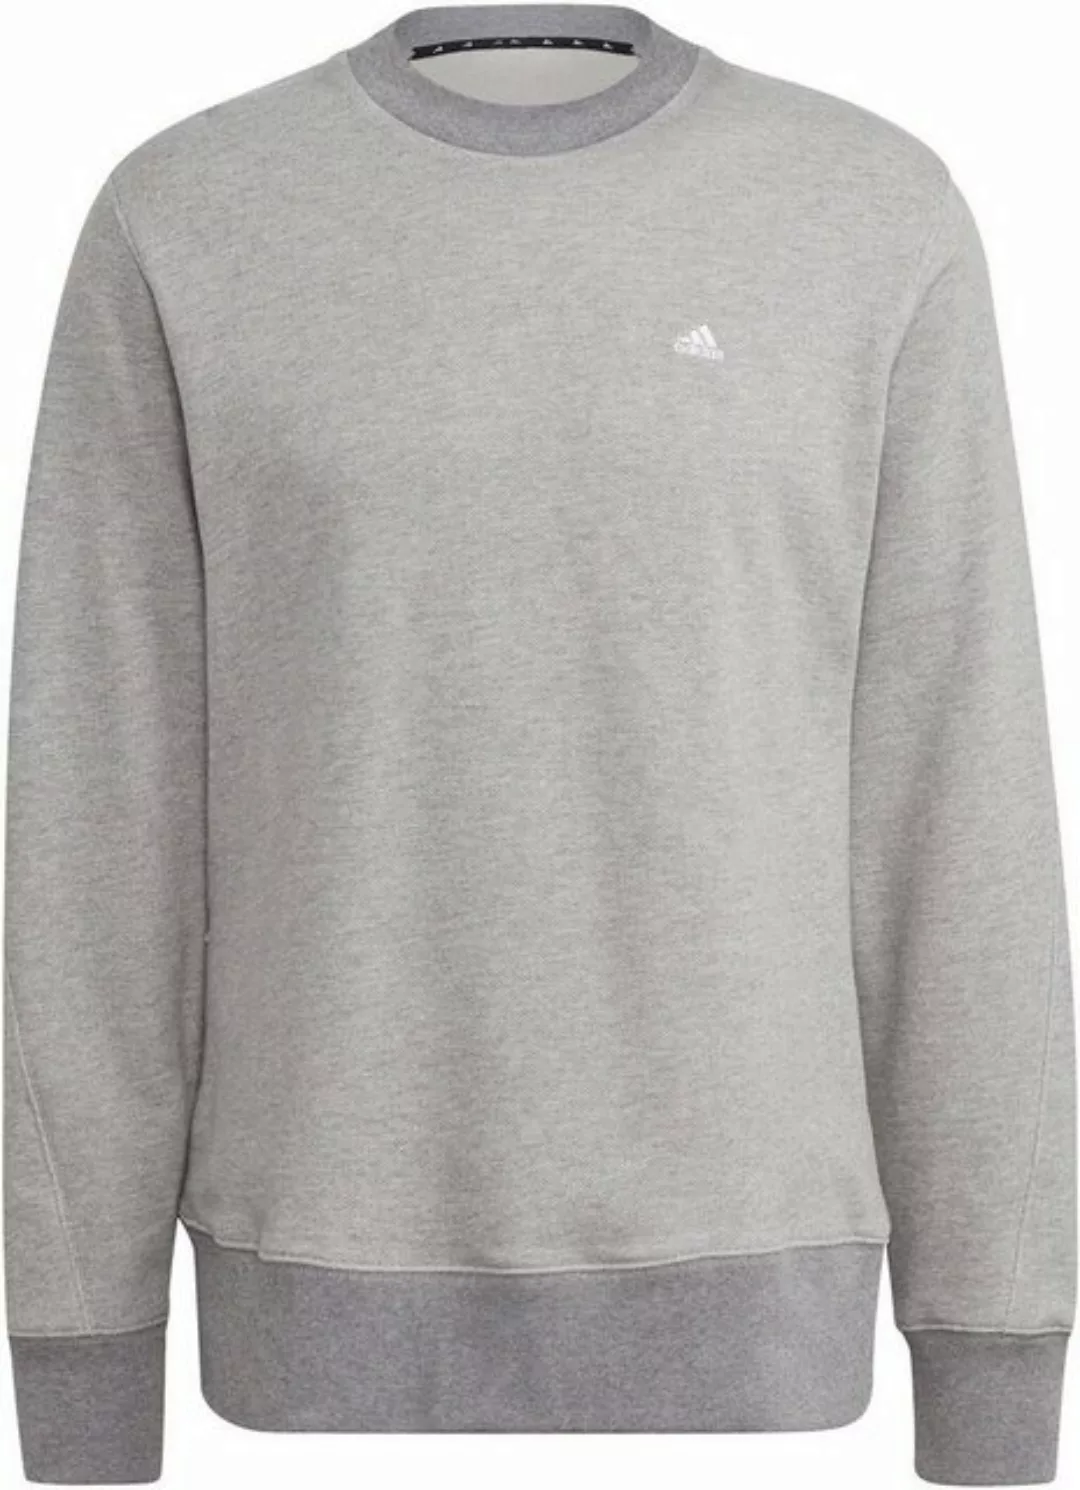 adidas Performance Sweatshirt M FI CC Crew günstig online kaufen